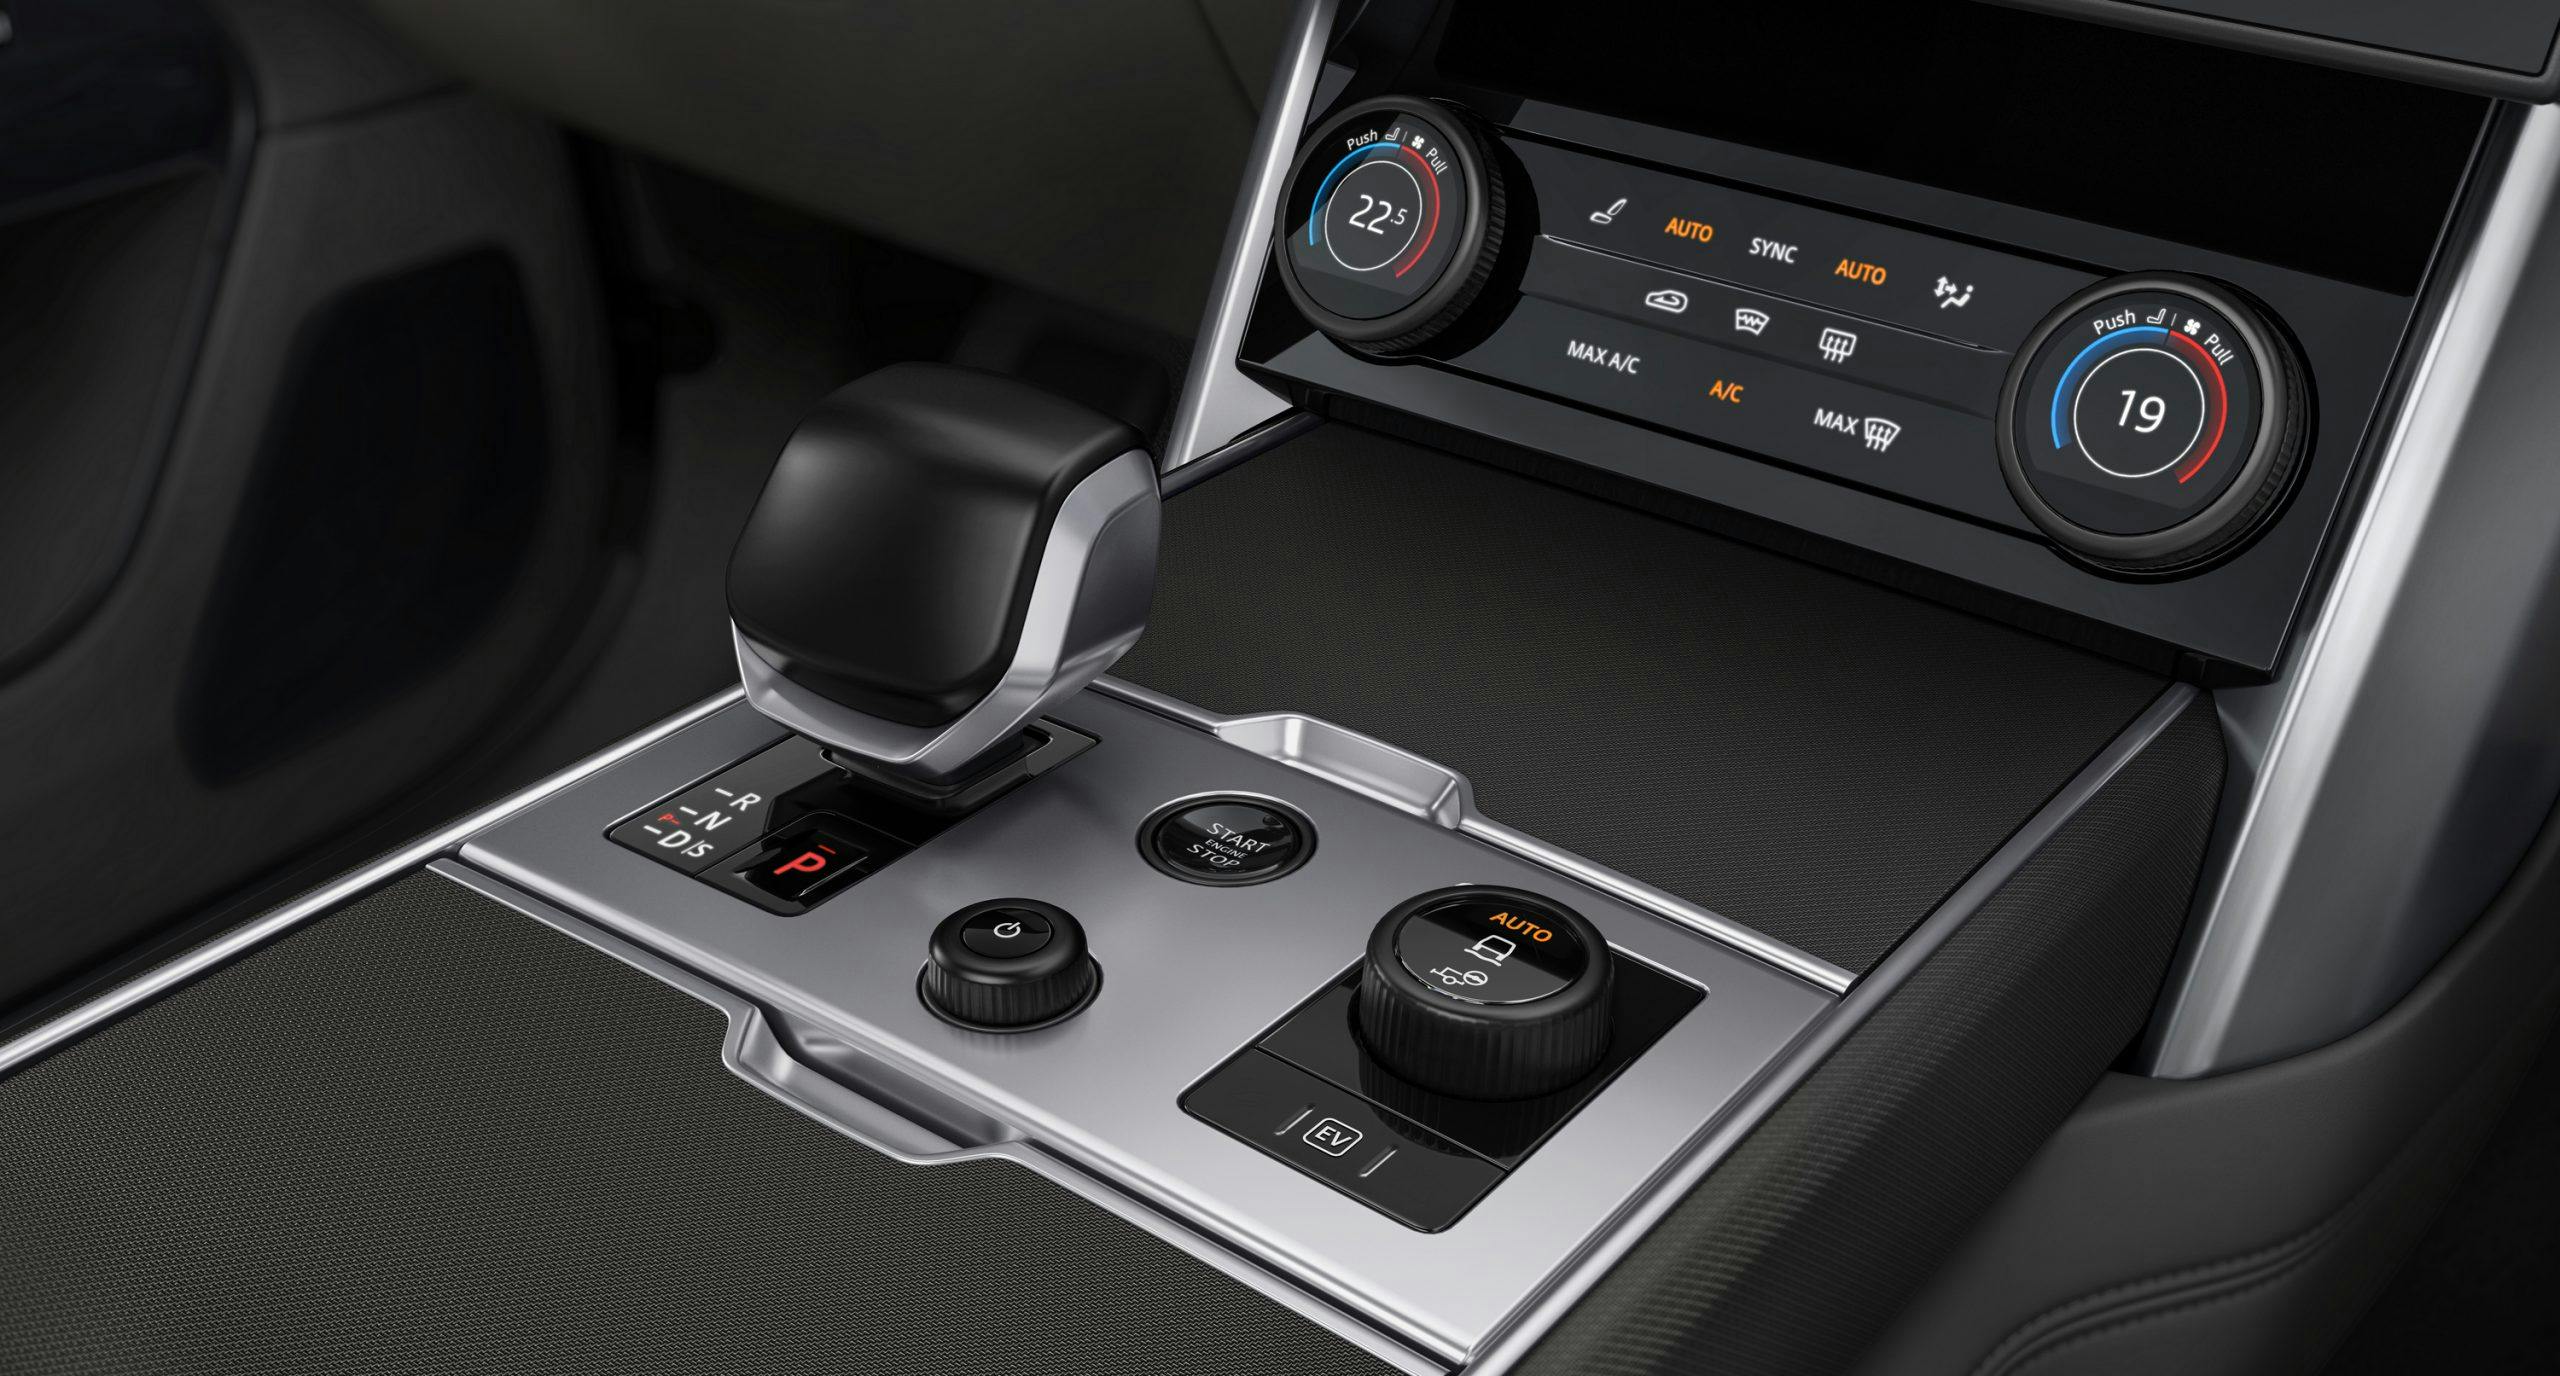 2023 Range Rover SV SWB Intrepid interior